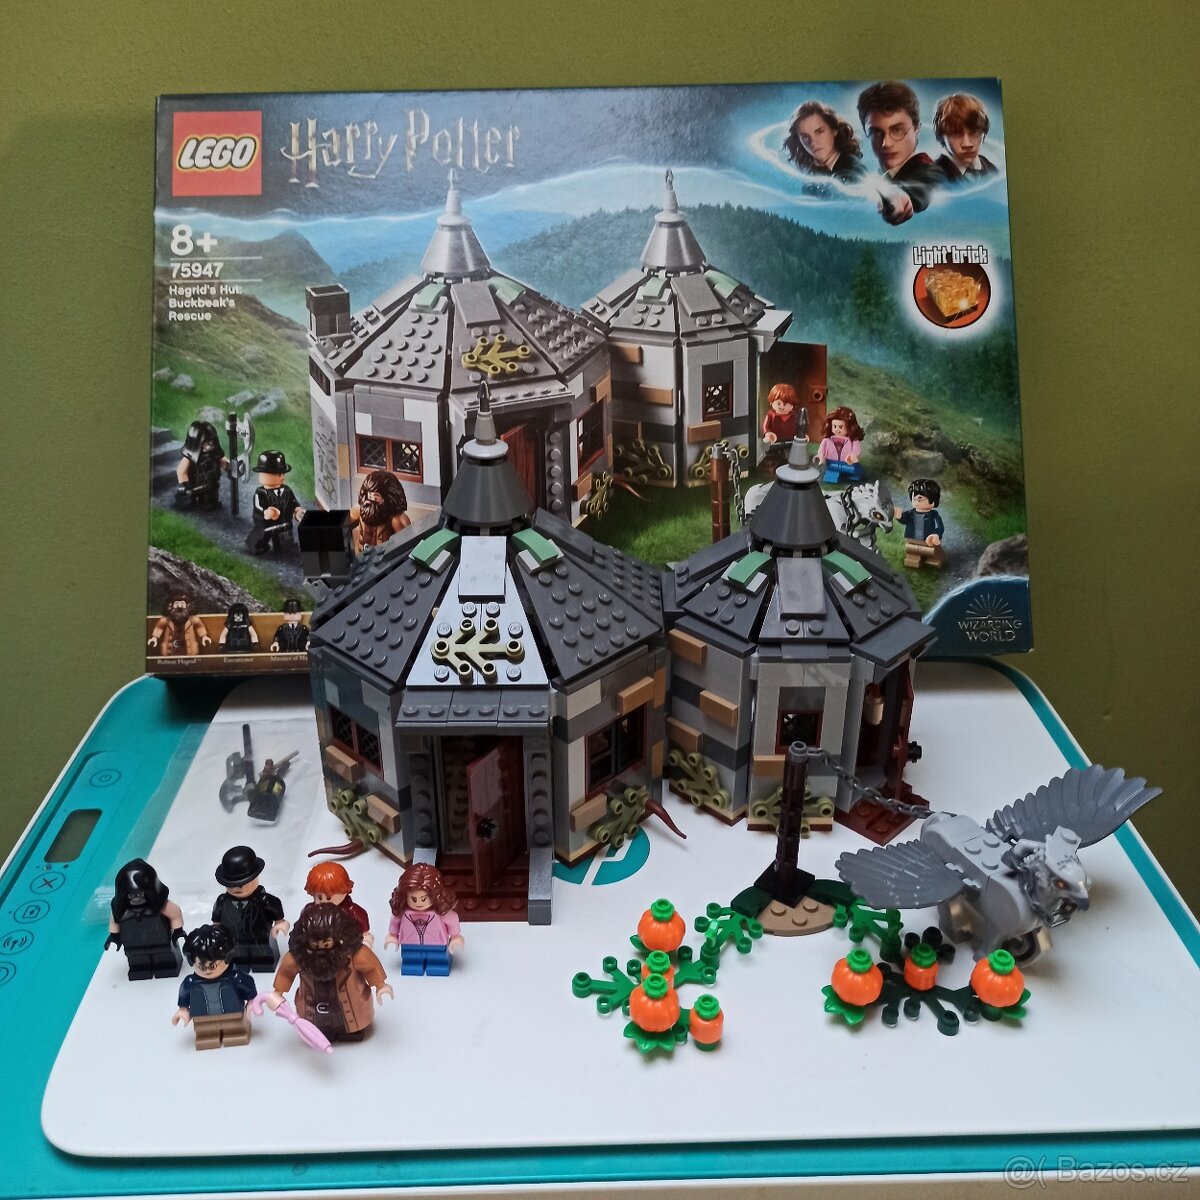 Lego Harry Potter 75947